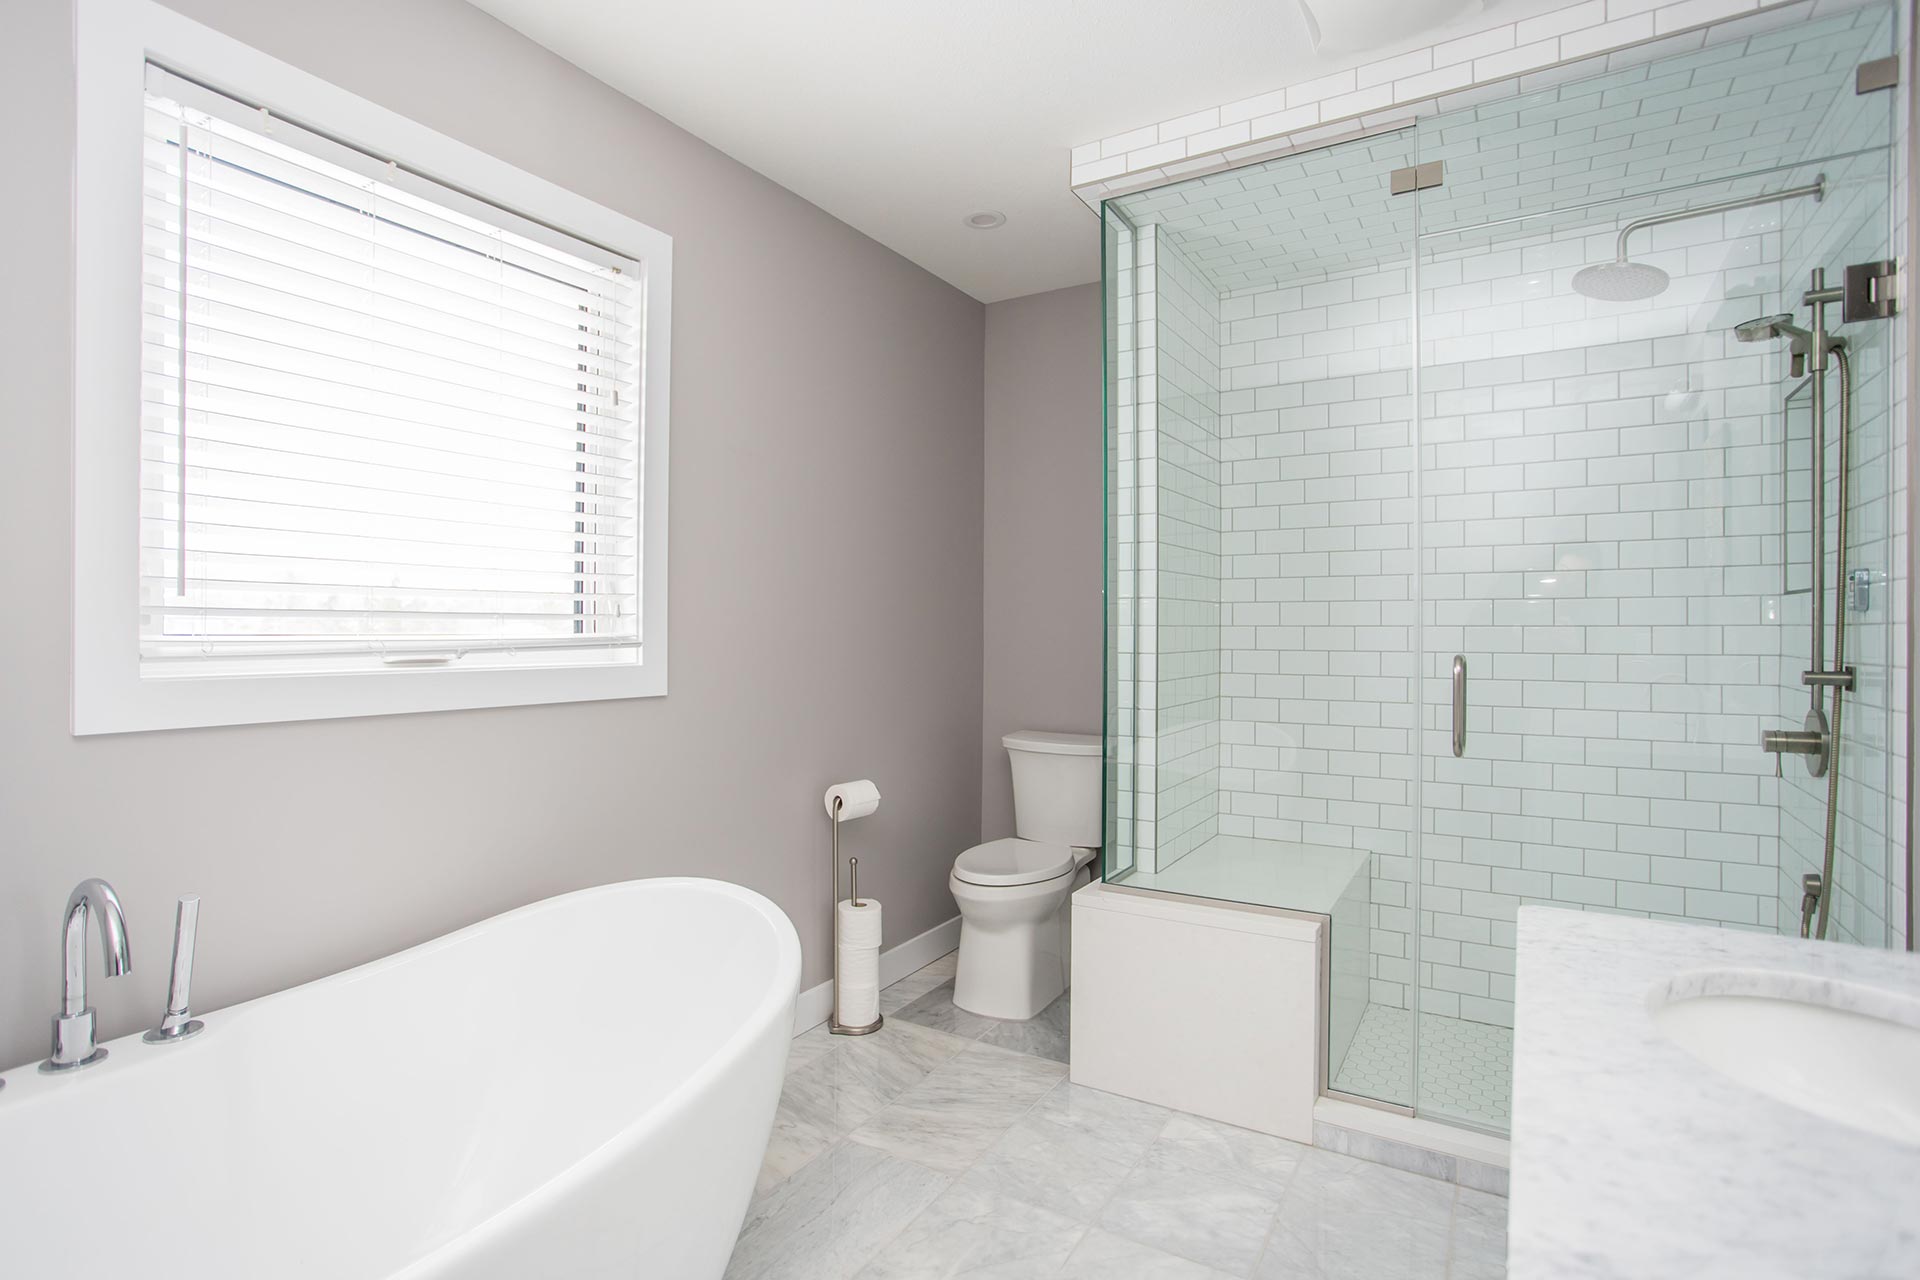 Belamour Homes - Emerald Park Kitchen and Bathroom Renovation - Shower and Bathtub